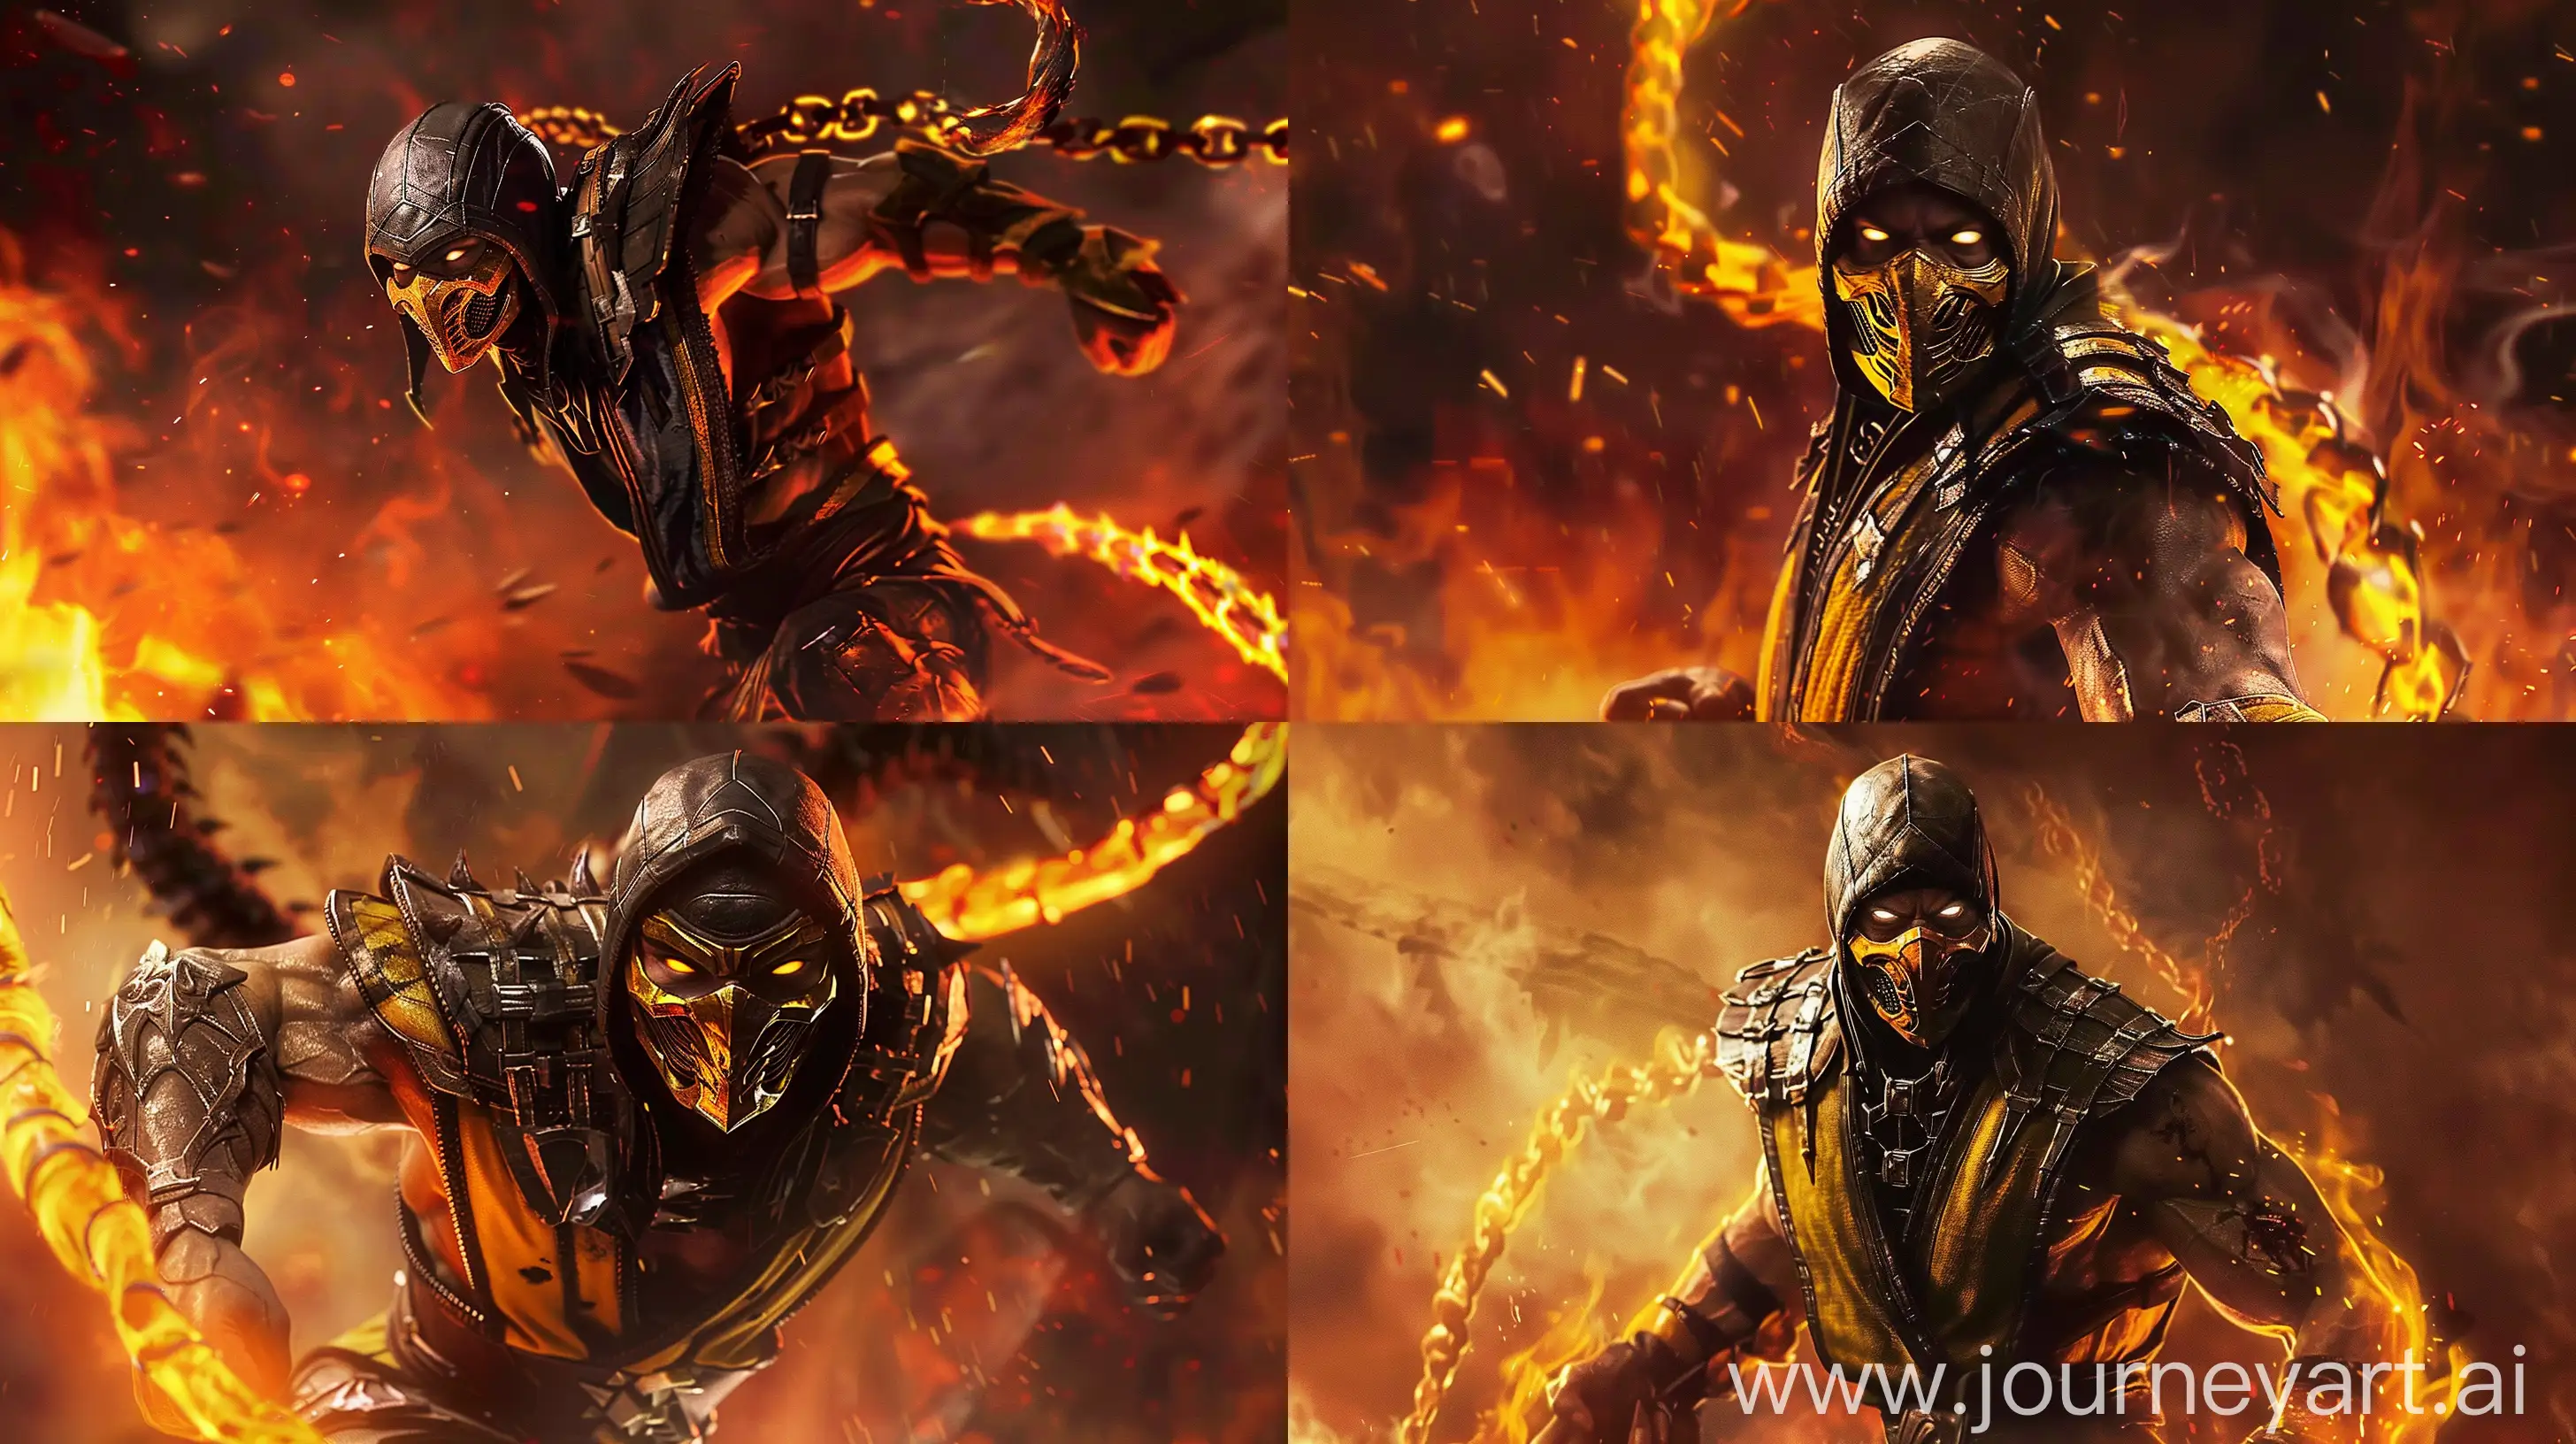 Enraged-Demon-Scorpion-from-Mortal-Kombat-in-Hyper-Realistic-Anime-Style